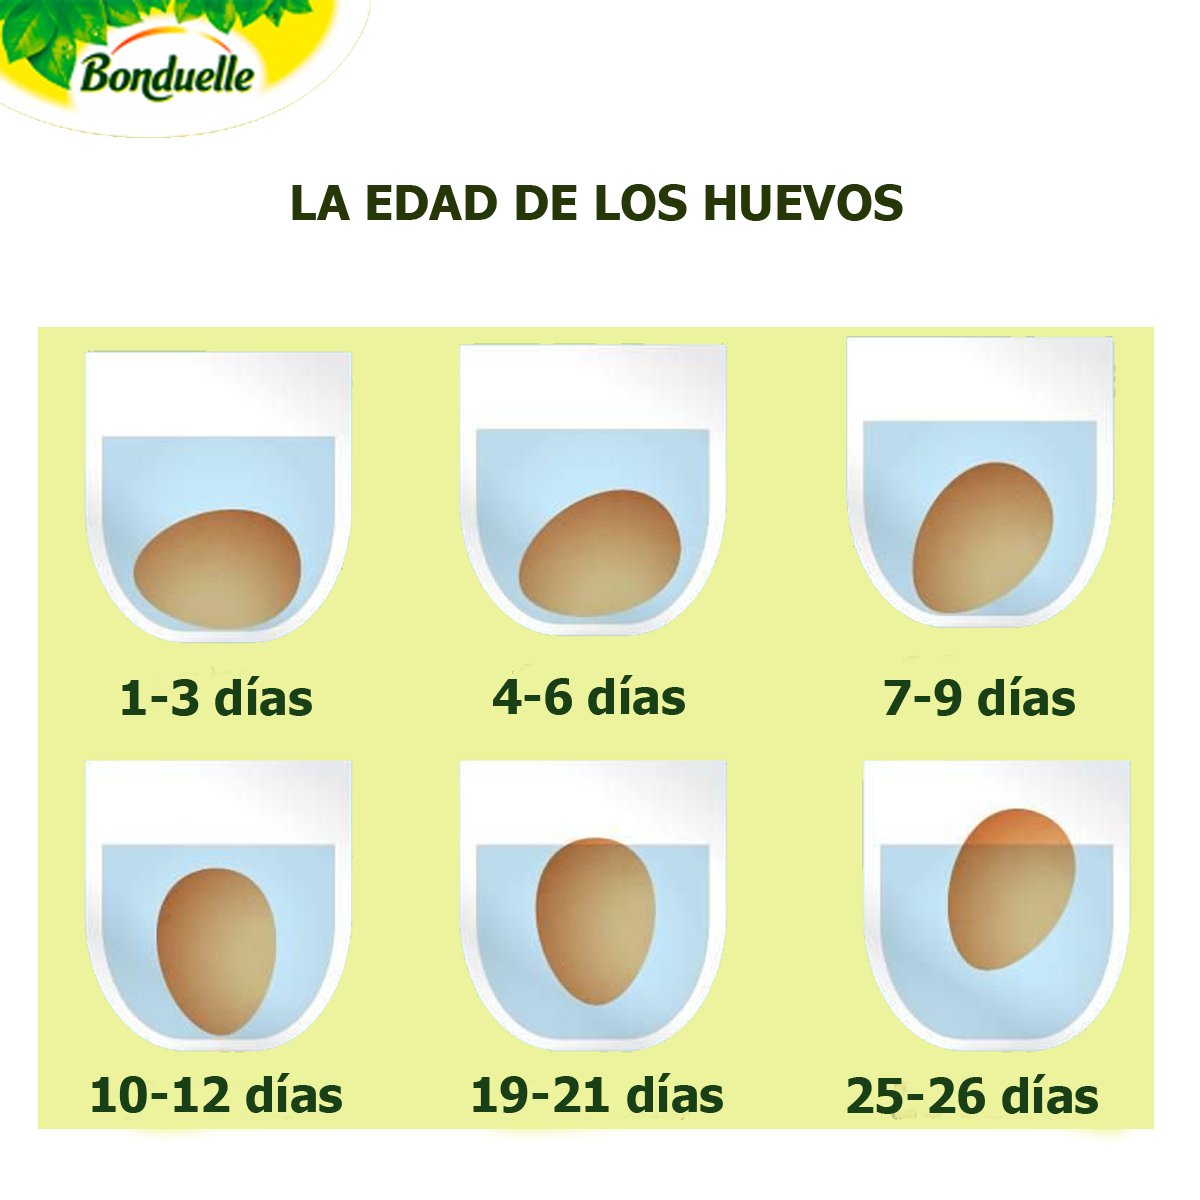 Republikanske parti ondsindet Mikroprocessor Bonduelle España on Twitter: "#truco #consejo Para saber si un huevo está  fresco mételo en un vaso de agua; si flota está caducado, sino fresco :)  https://t.co/w4N31Y610E" / Twitter